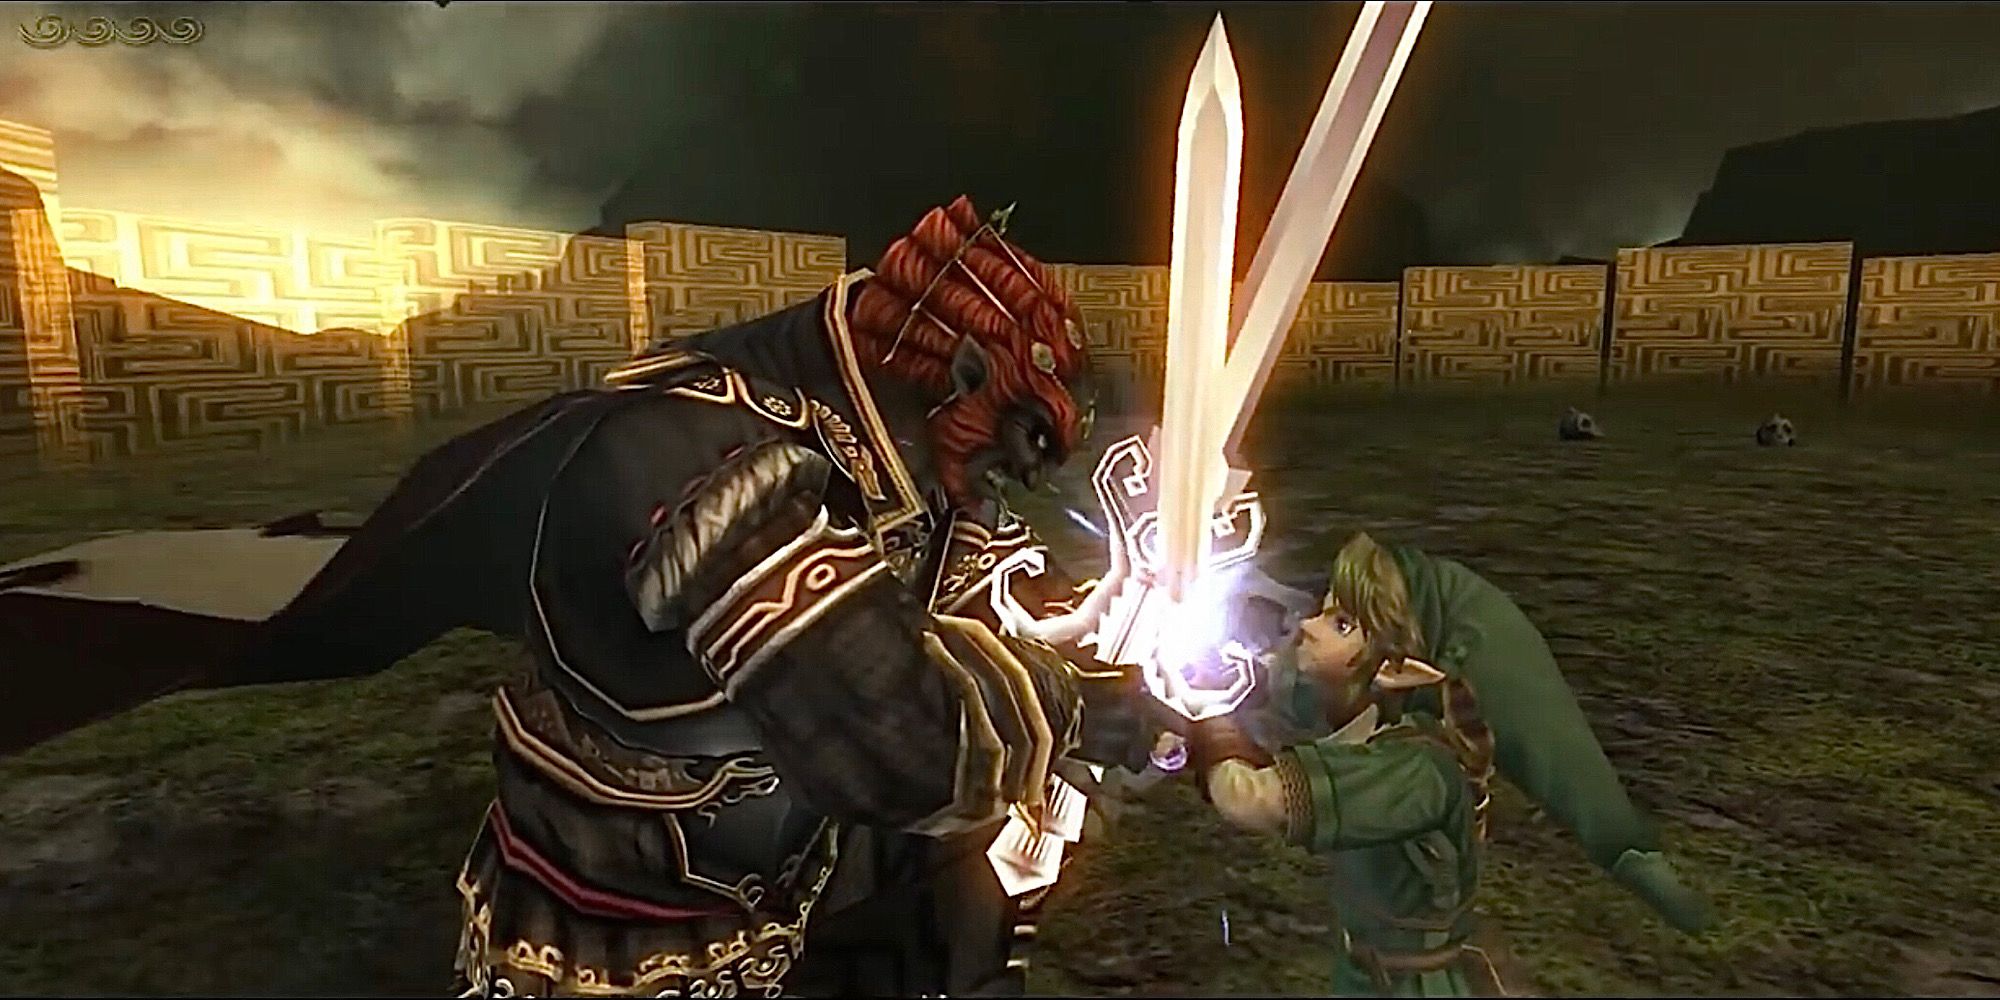  Ganondorf and Link crossing swords for their final battle in The Legend of Zelda: Twilight Princess